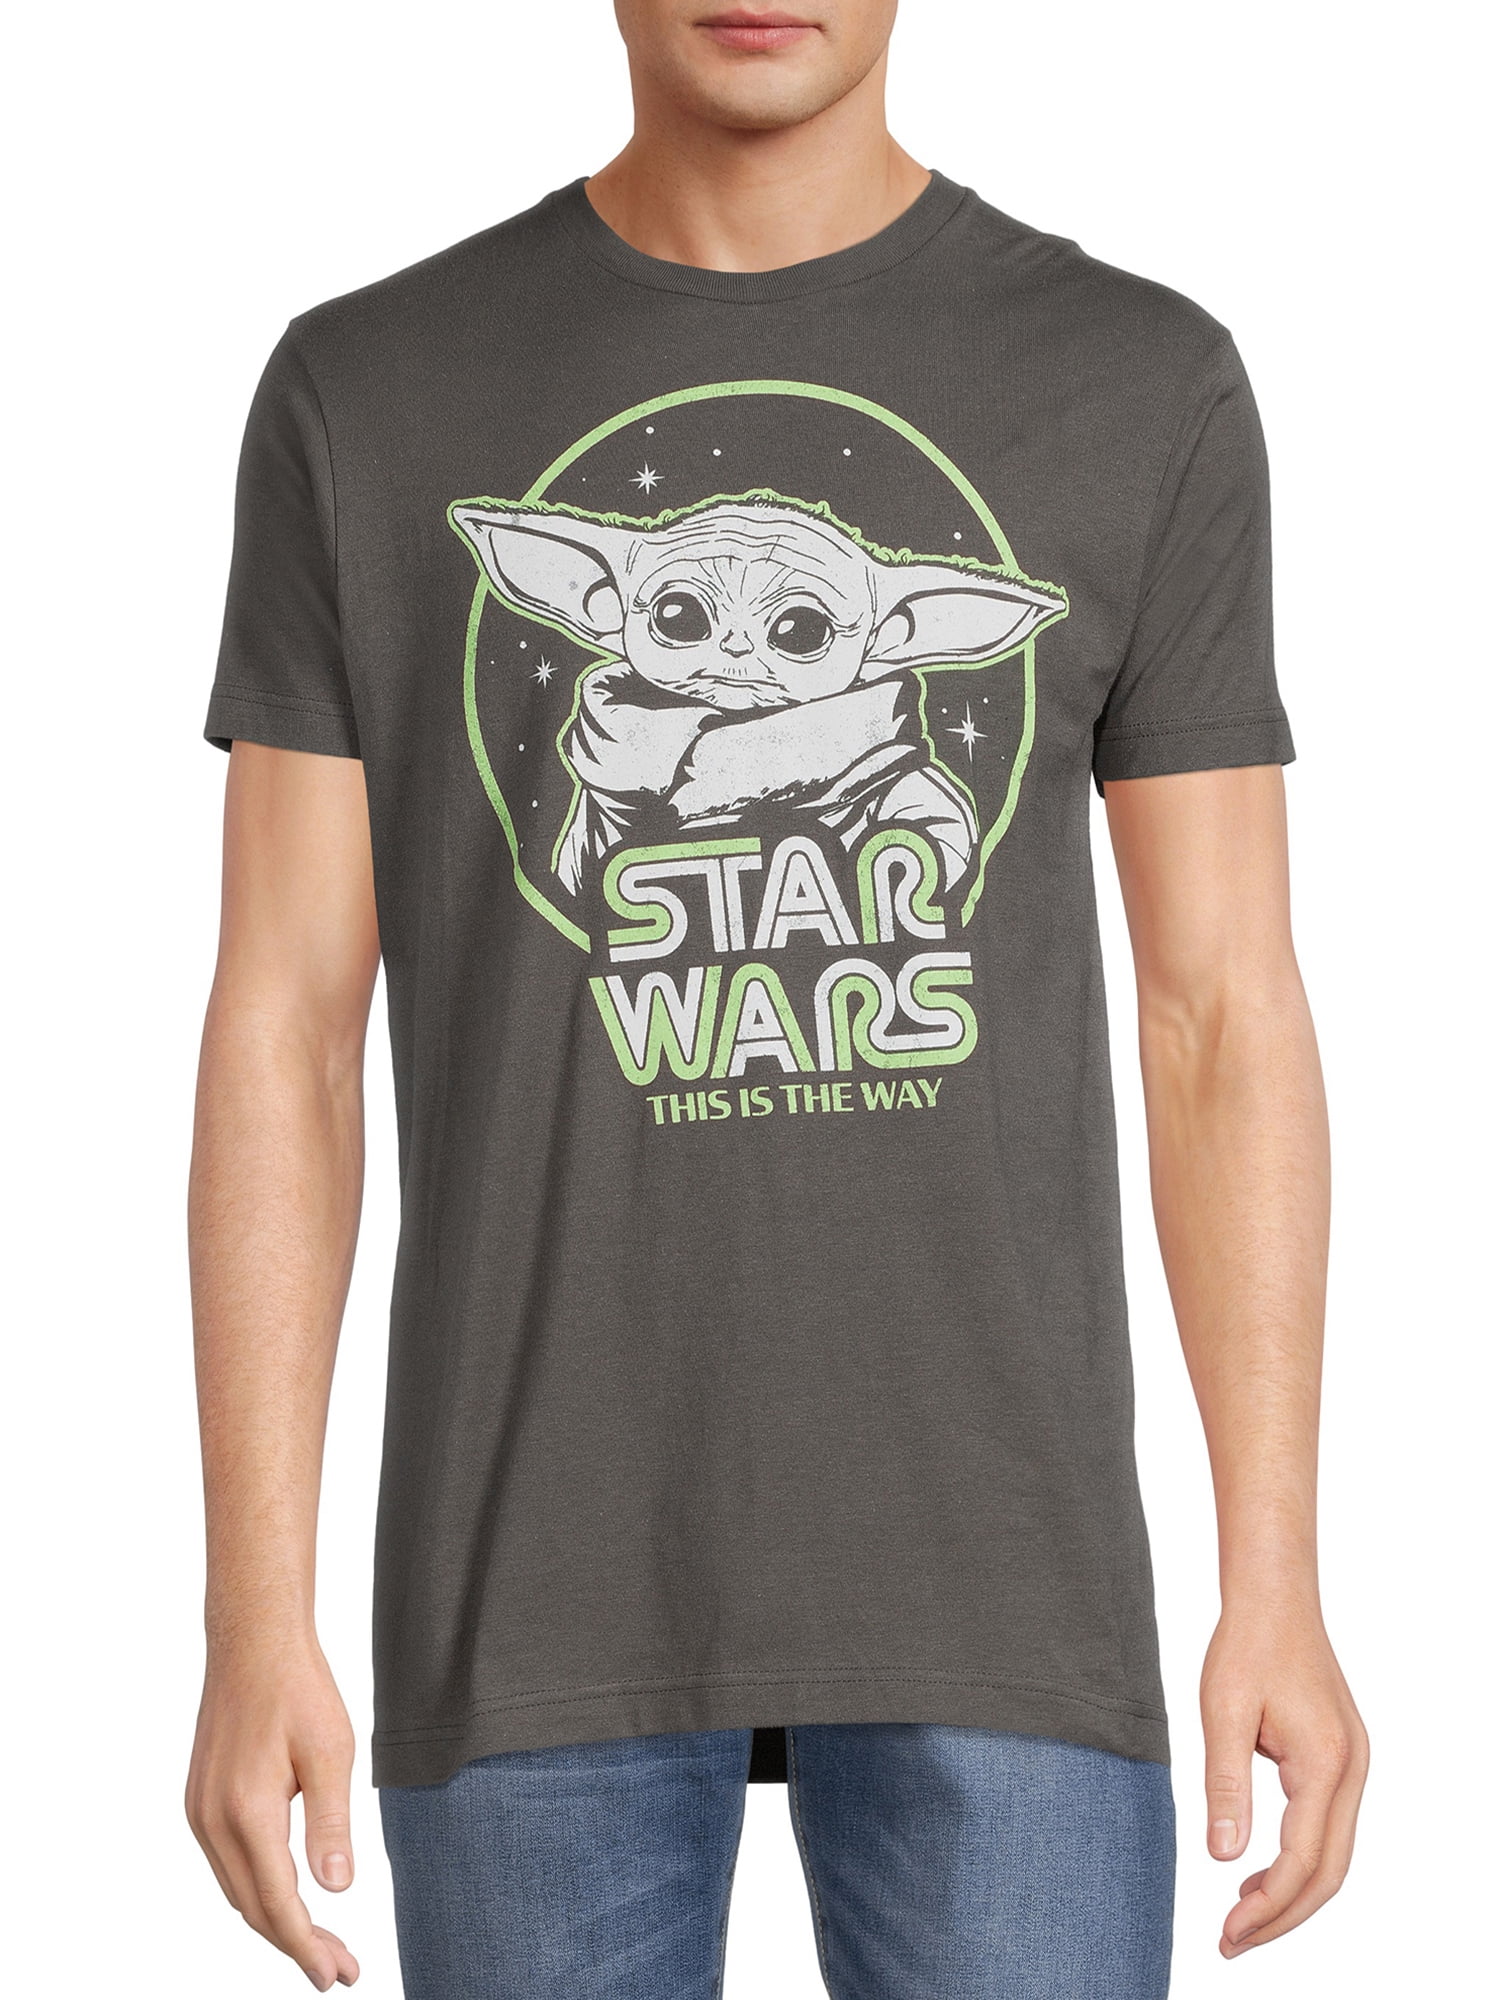 Star Wars Men's Retro Roundup Graphic Tee with Sleeves, Sizes S-3XL - Walmart.com